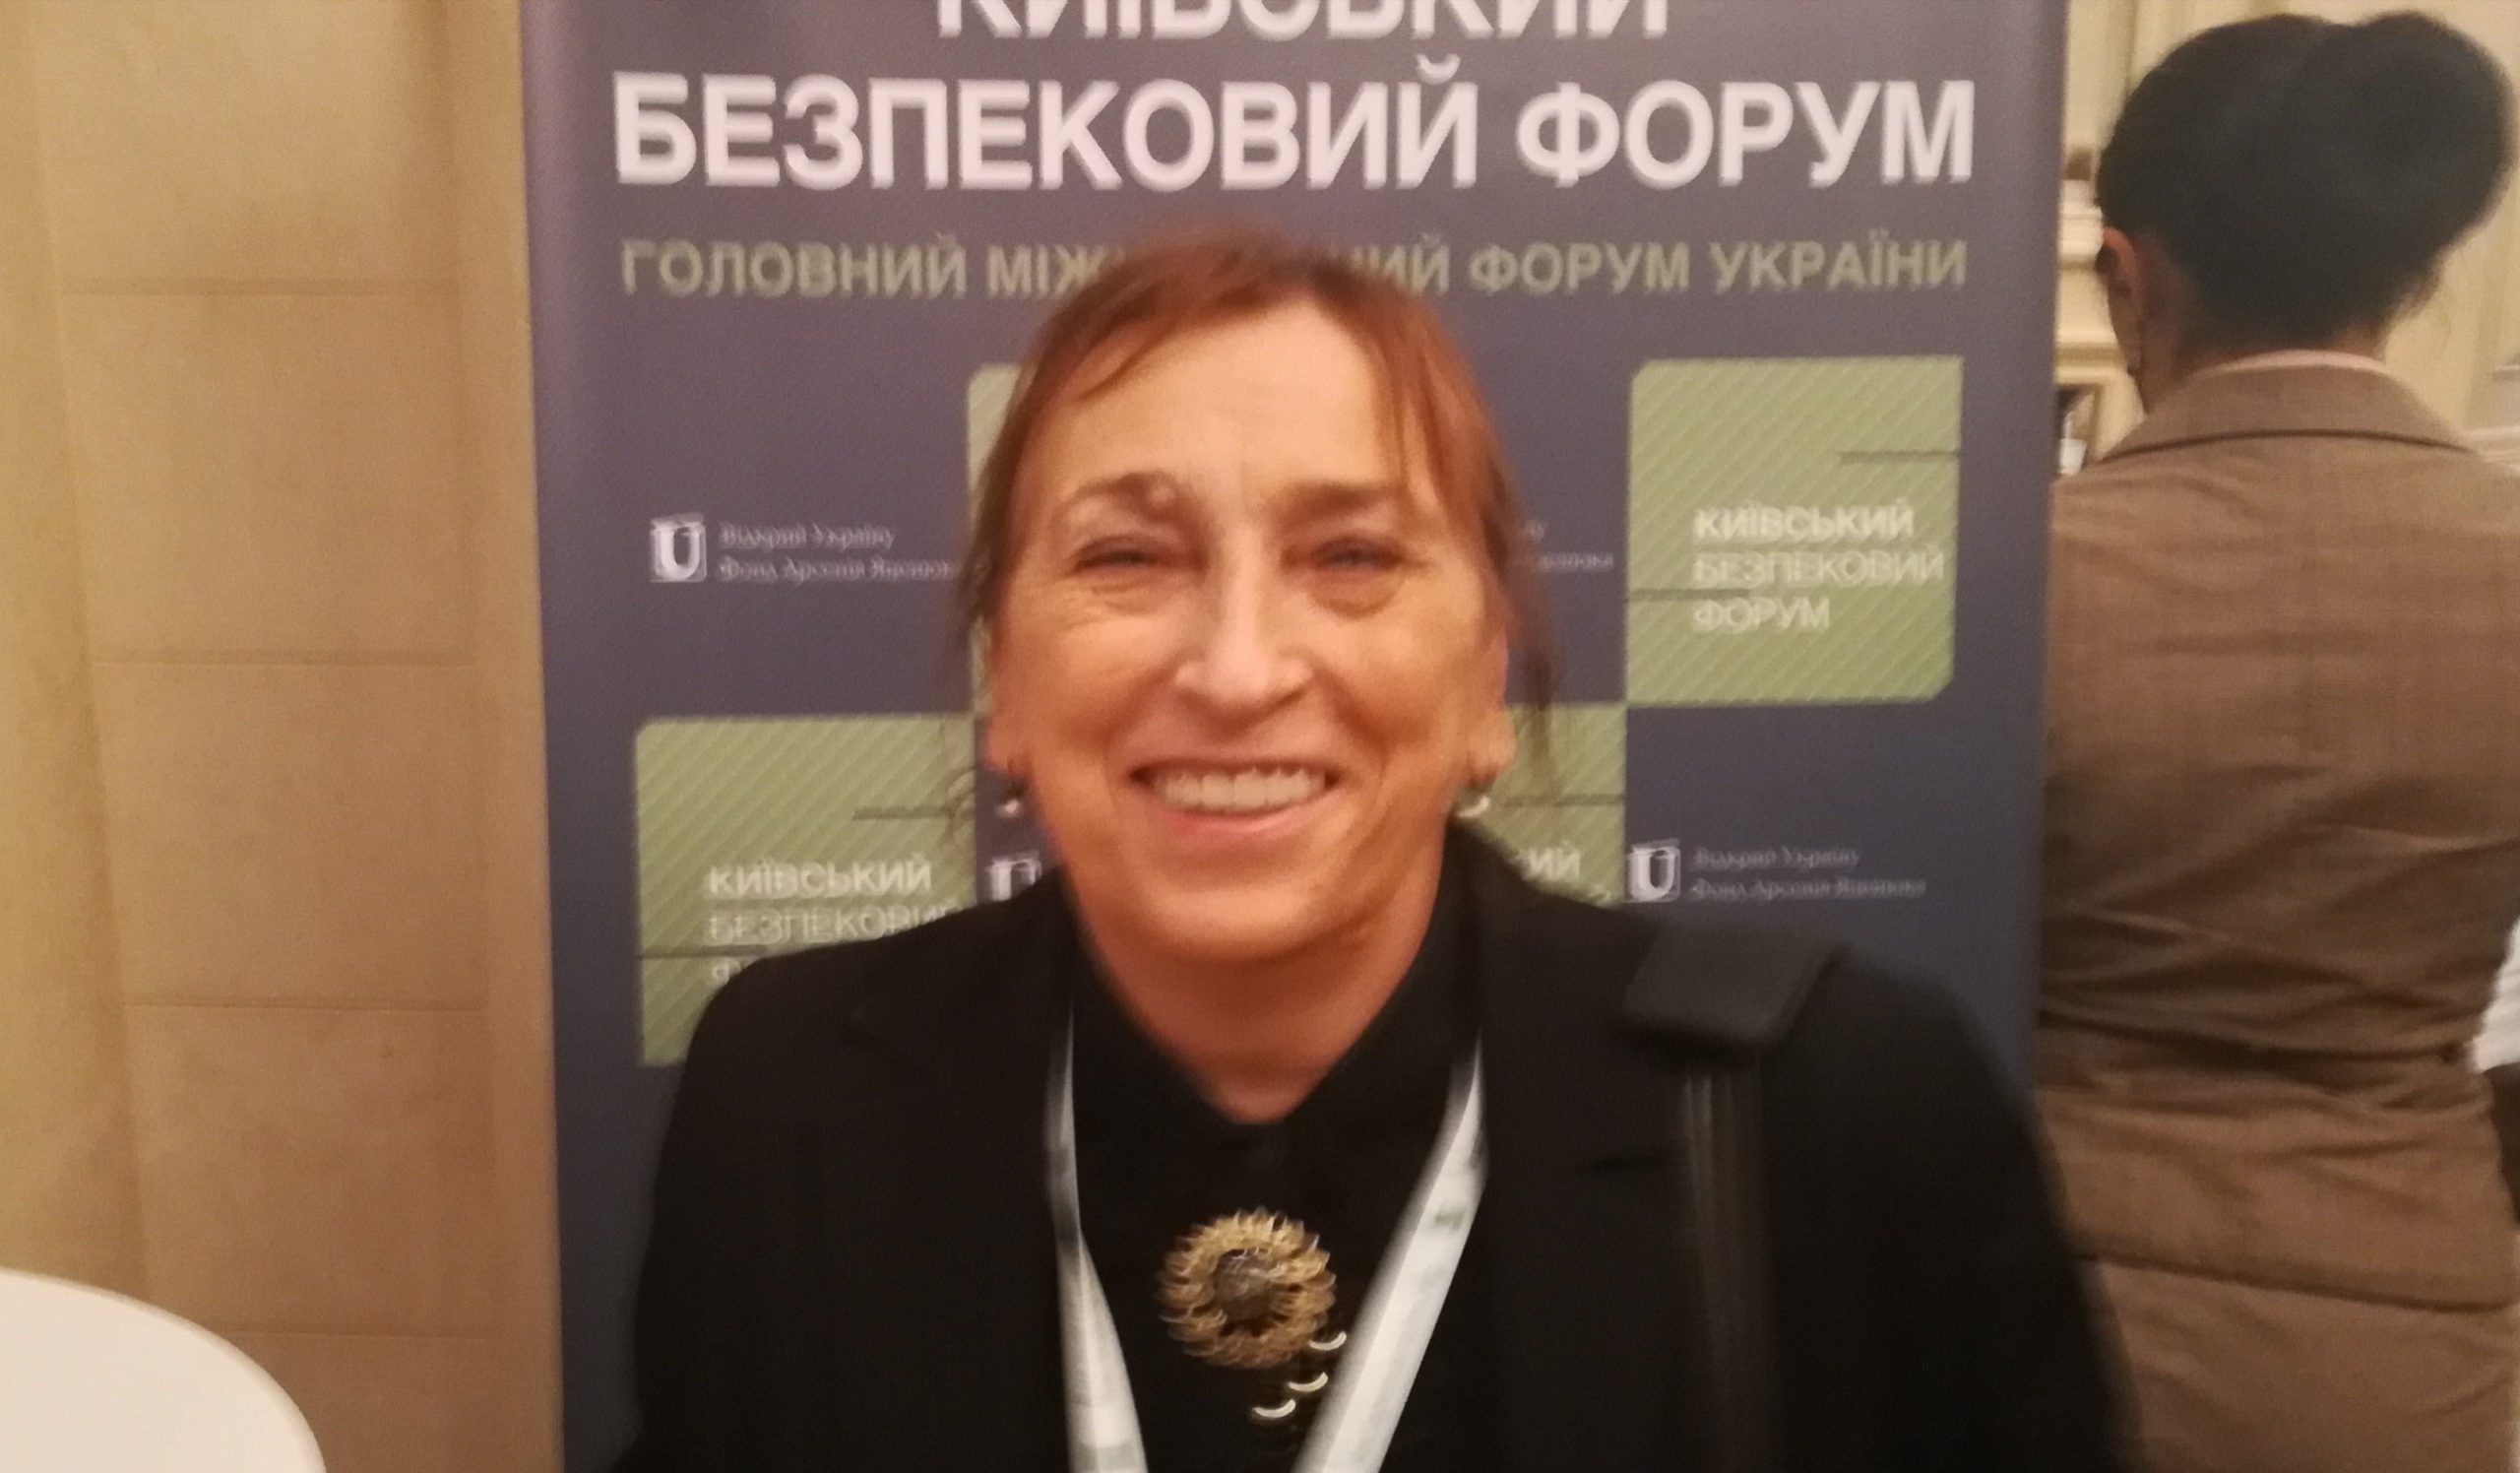 Ukraine’s support for Zelenskyi tells about infantility of society – Iryna Bekeshkina